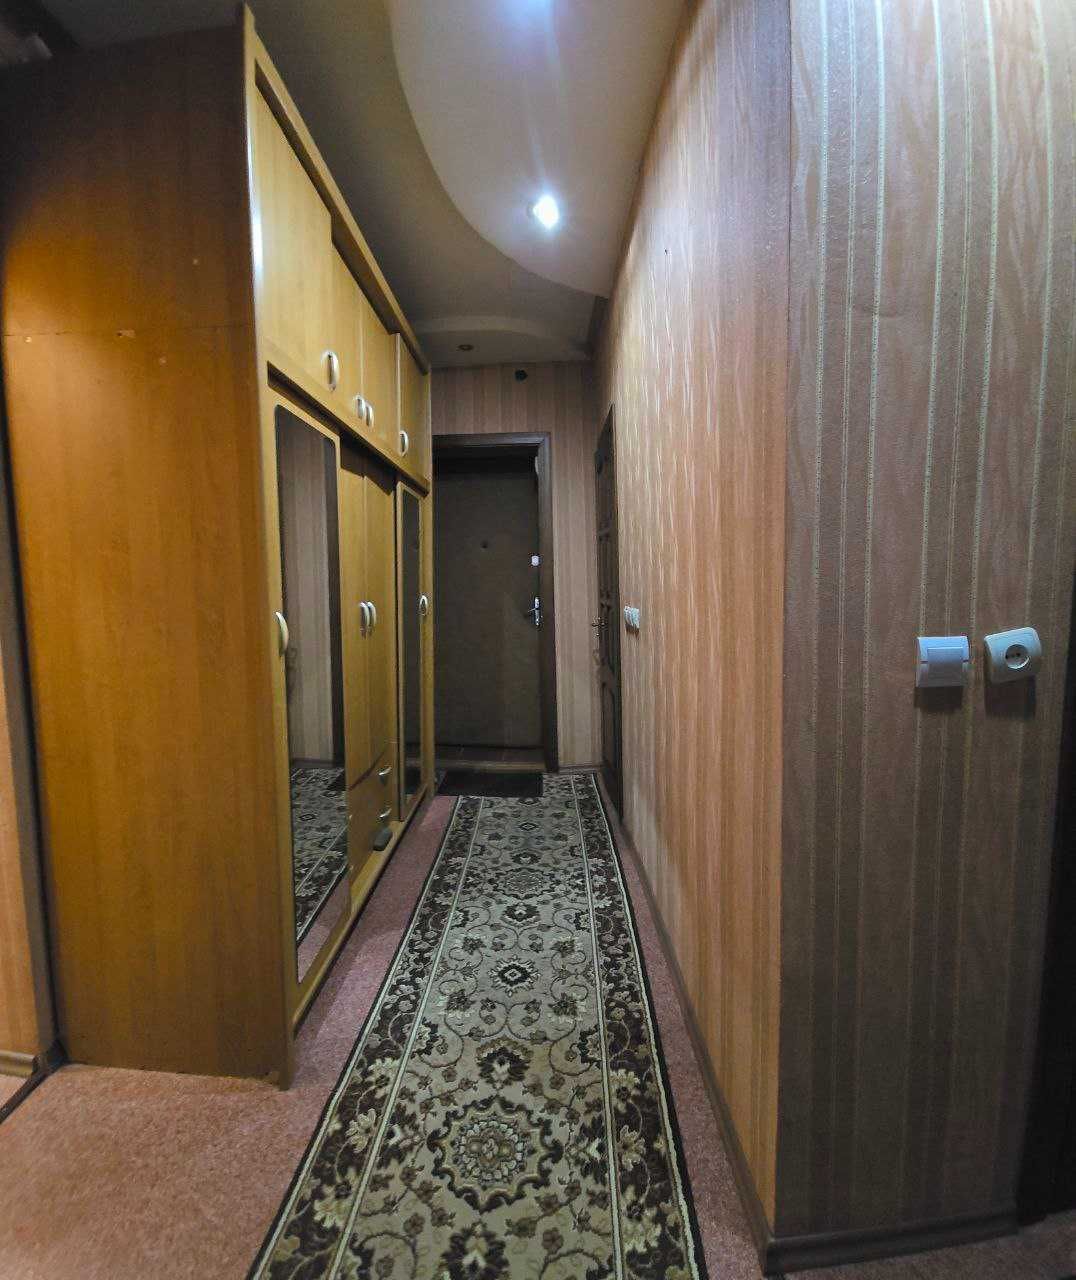 Продам двокімнатну квартиру в мальовничому селищі Бучанської громади